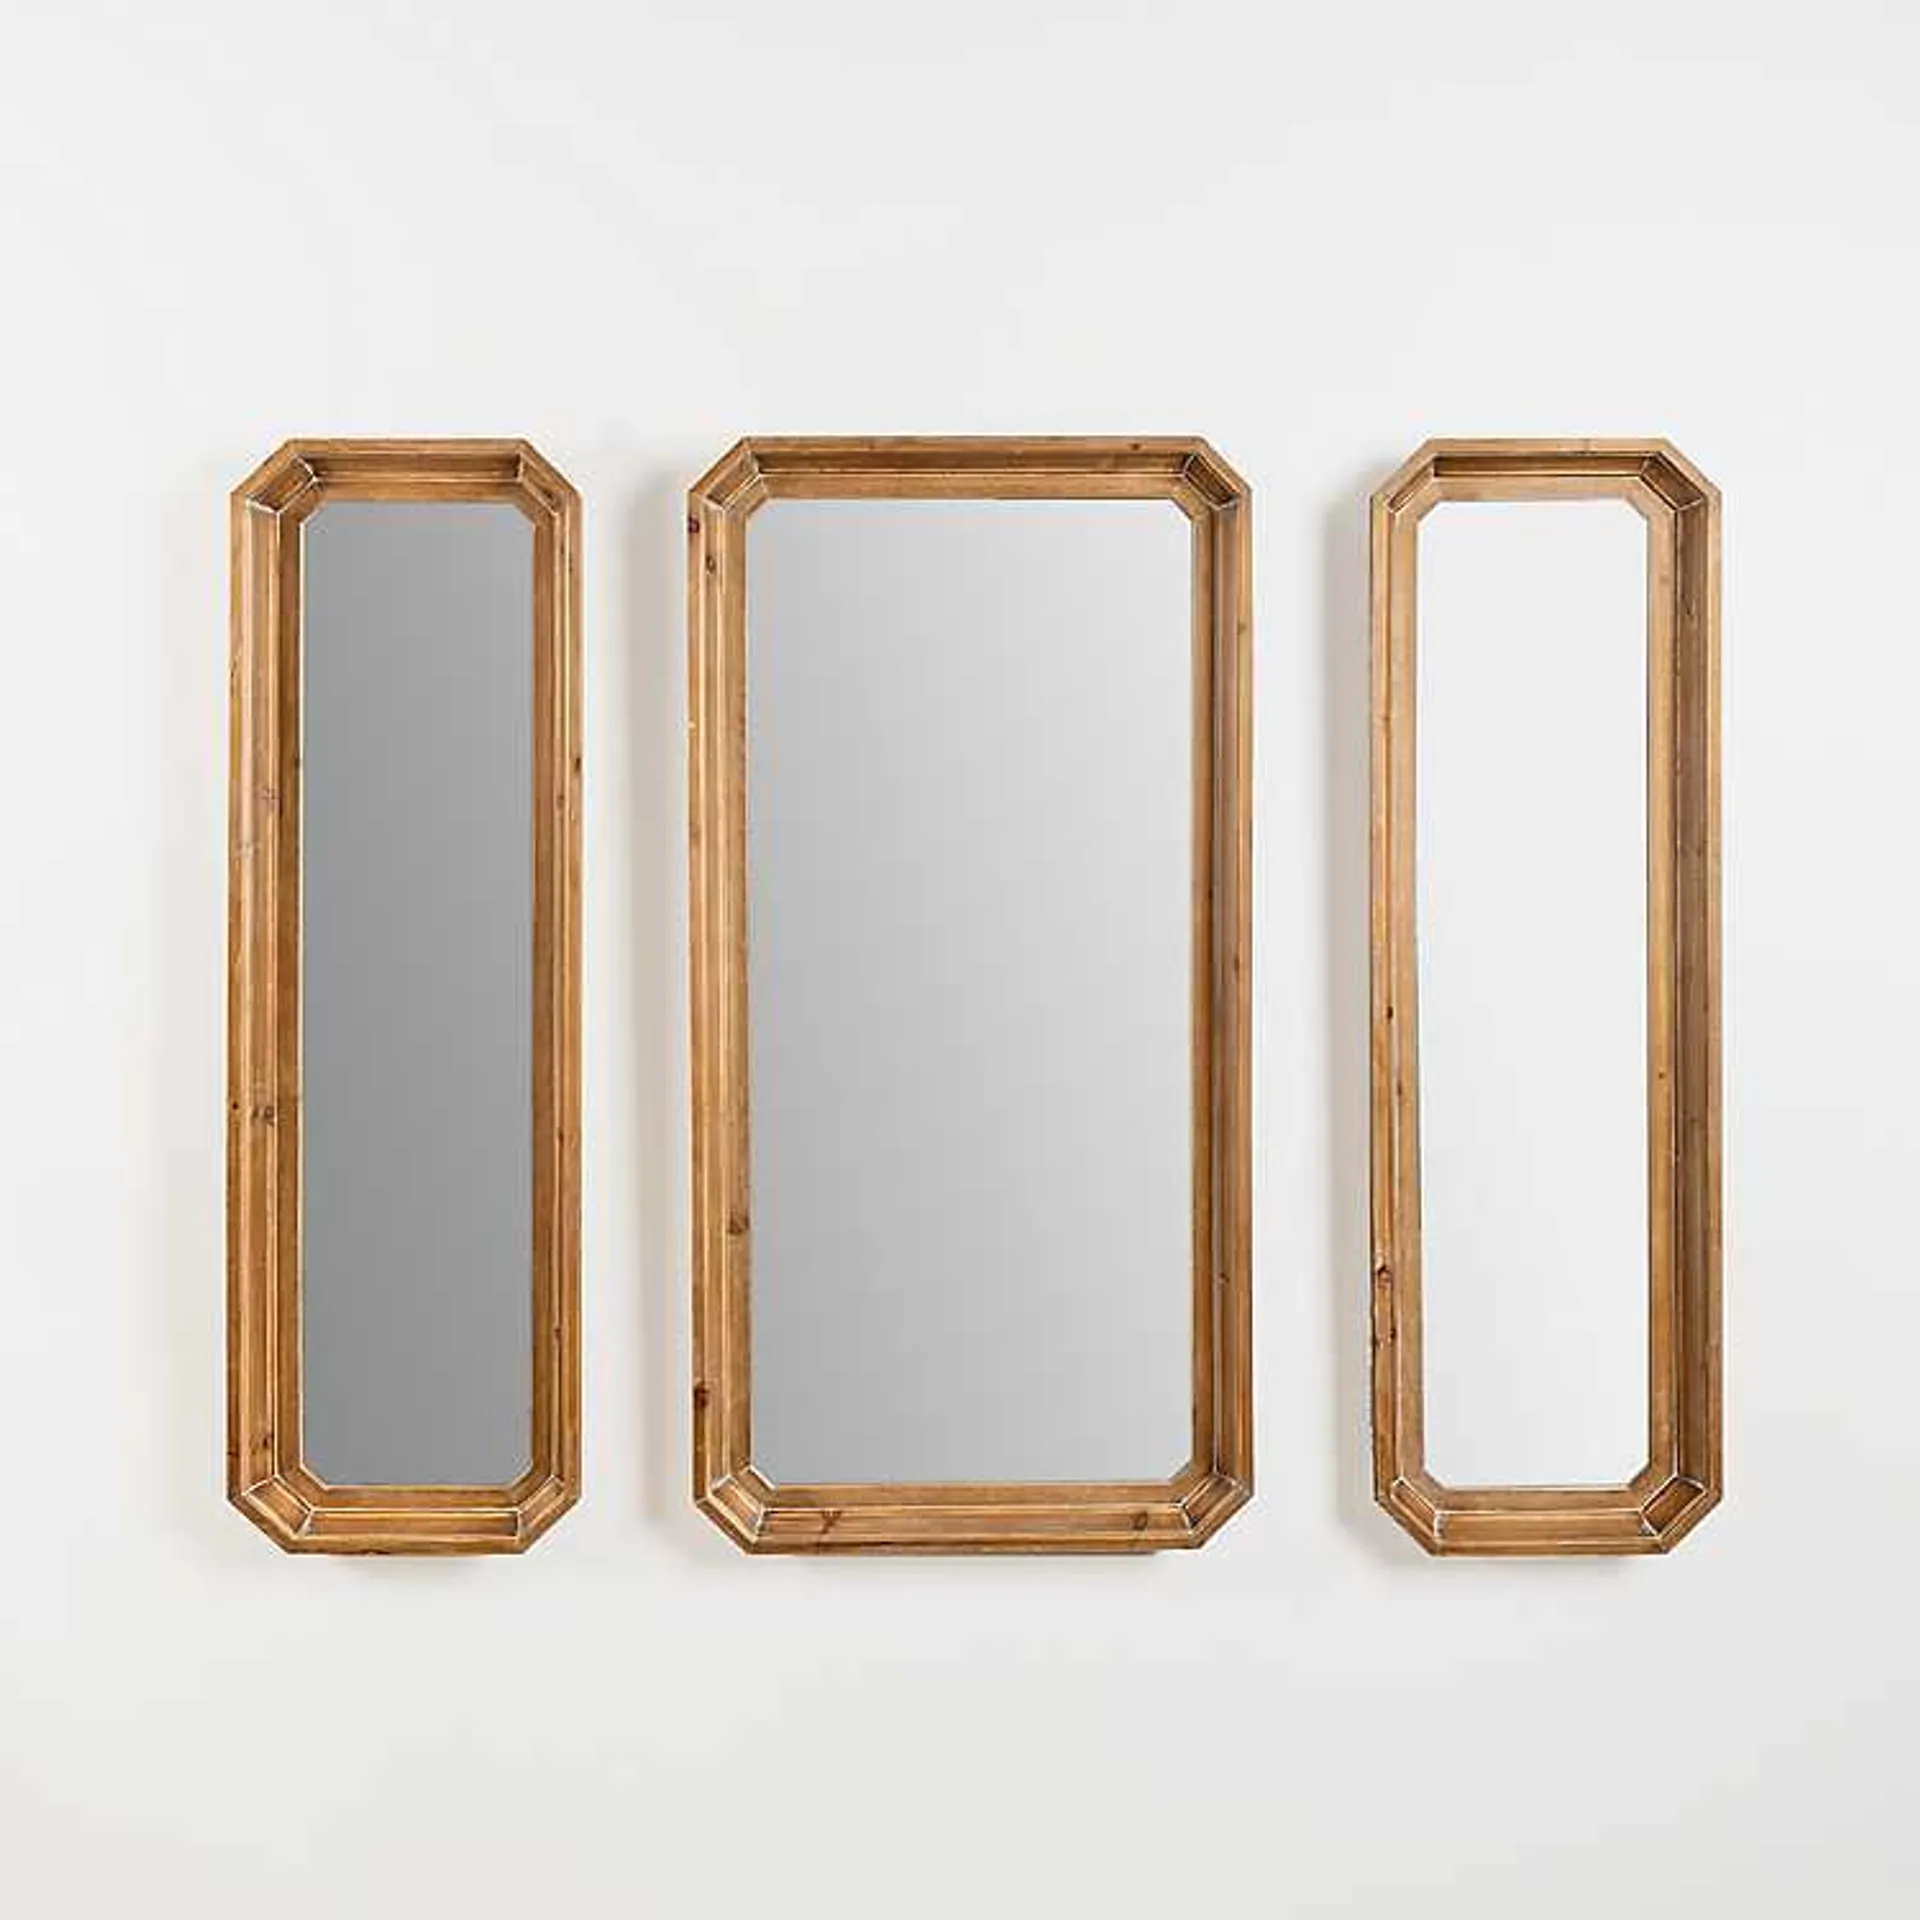 Warm Wood Inset Mirrors, Set of 3